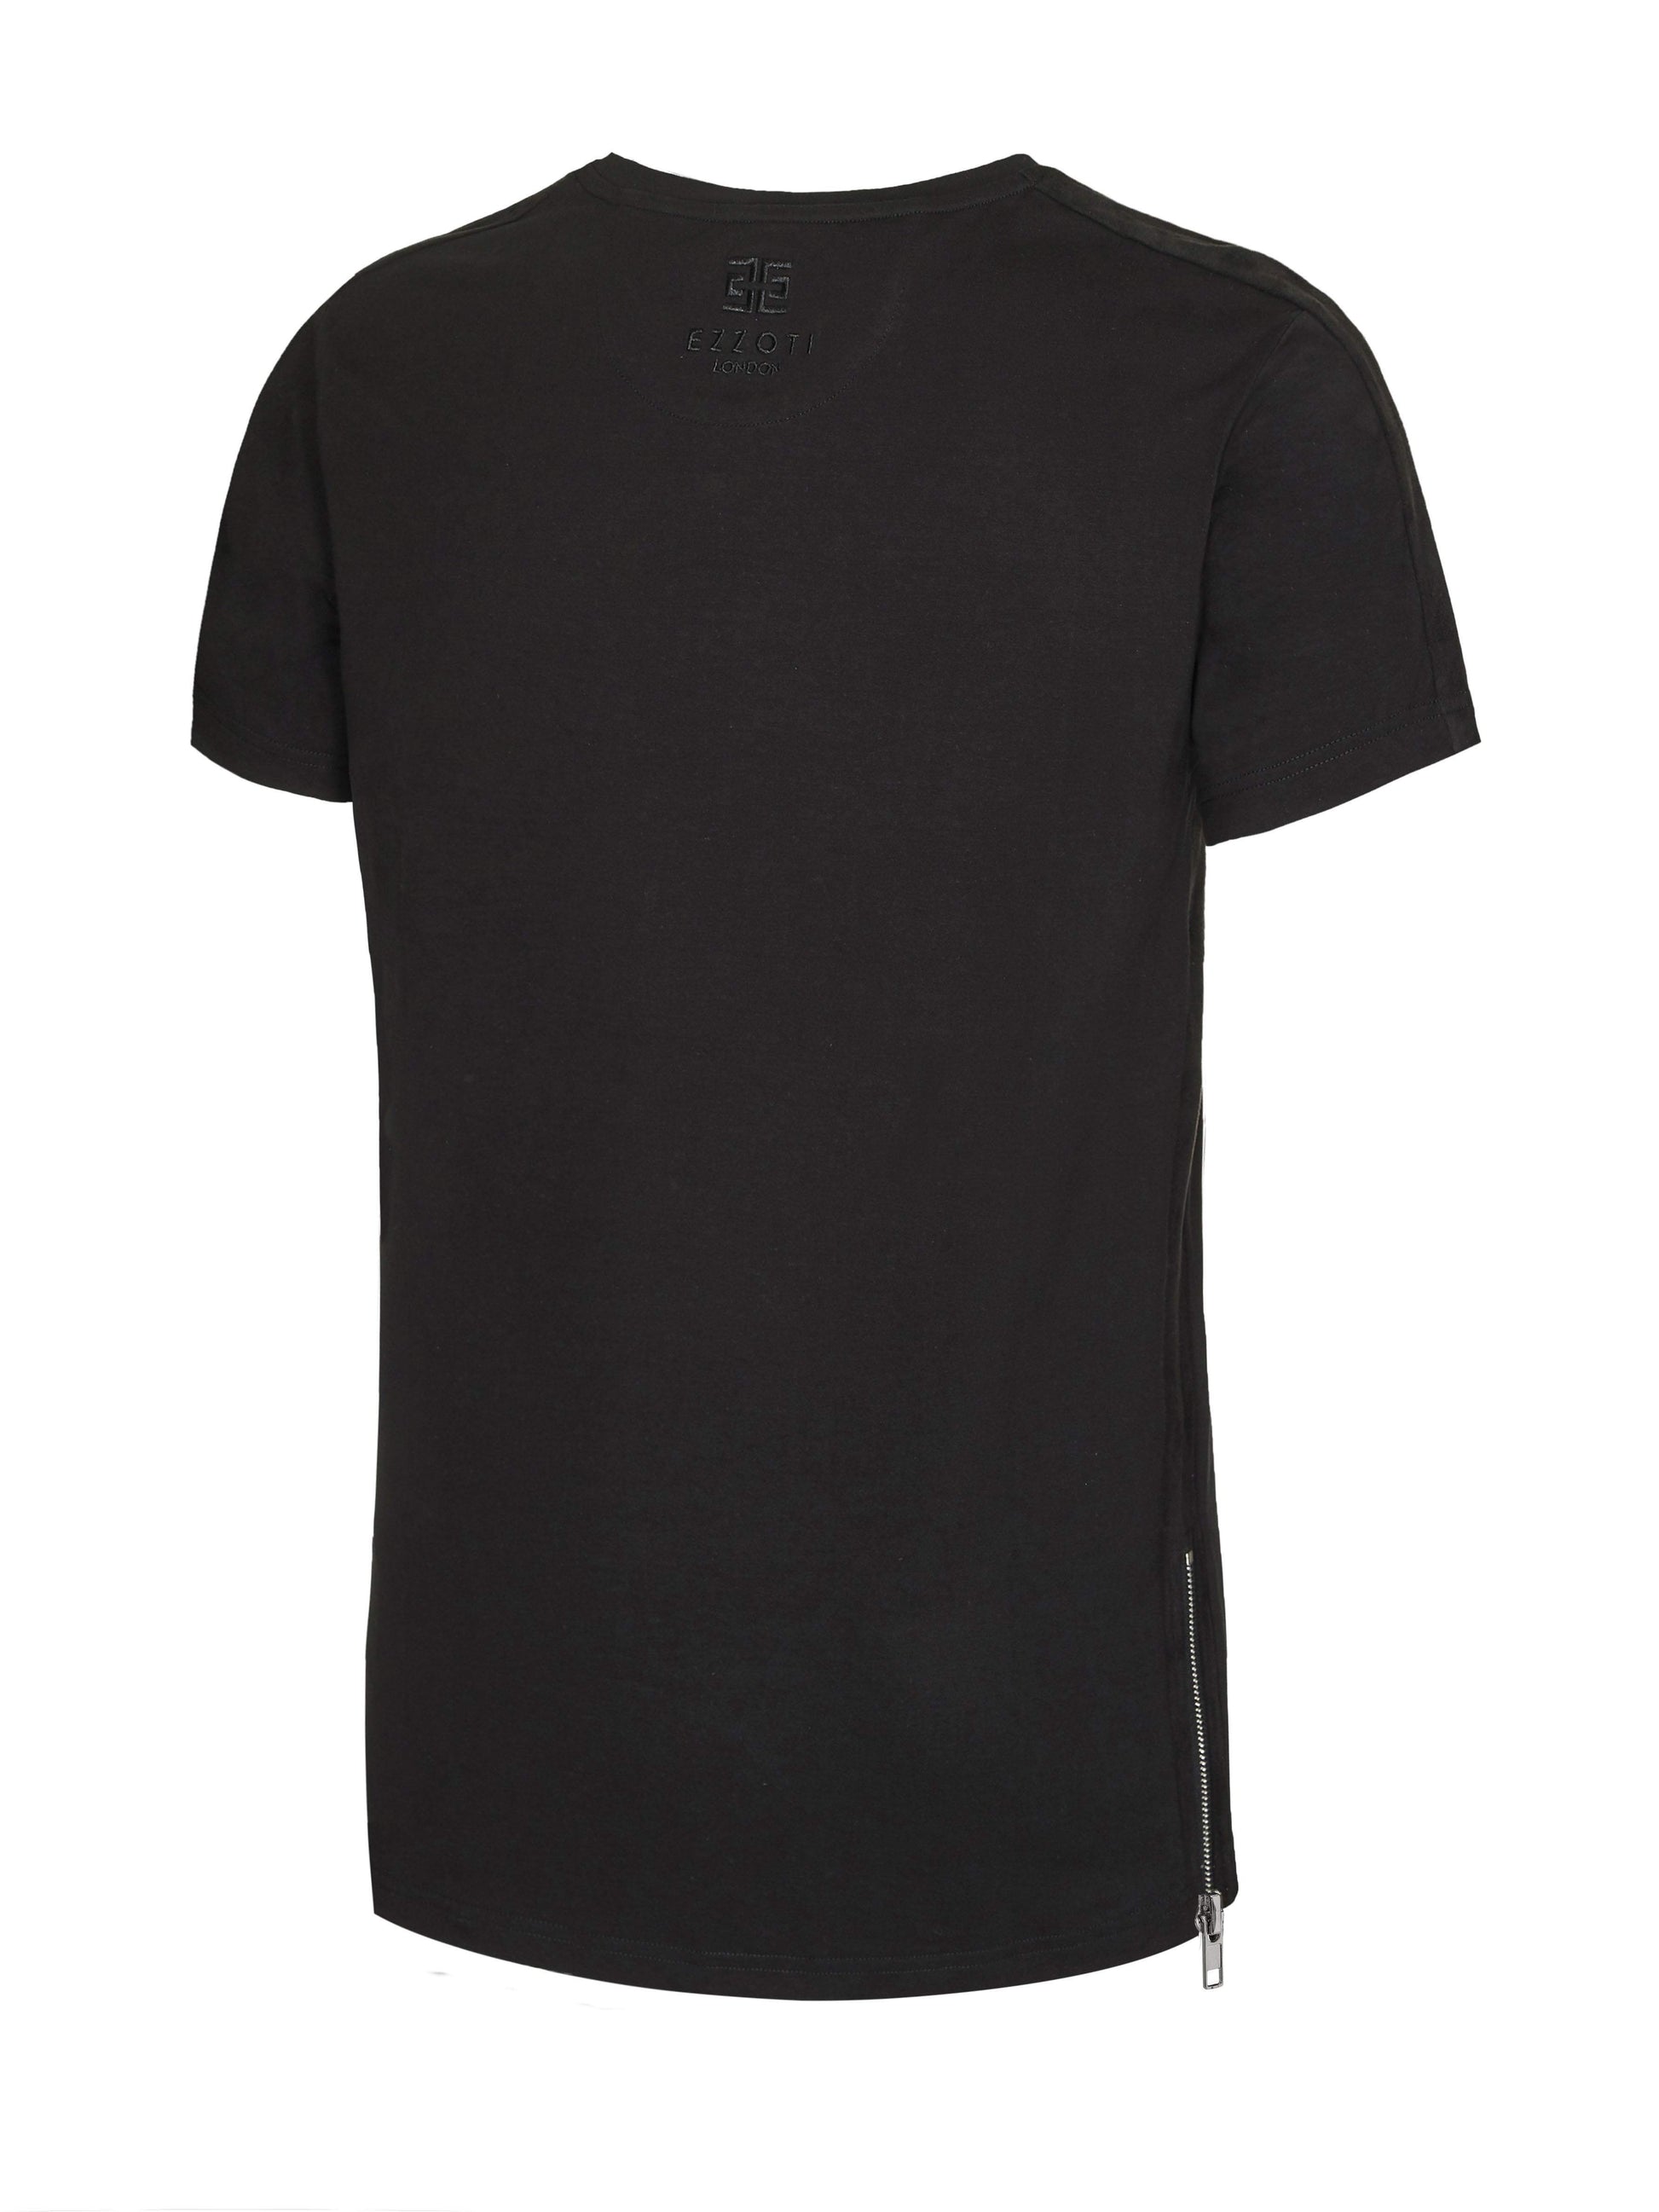 EZZOTI Suede Stripe Cotton Side Zip T-Shirt - Black